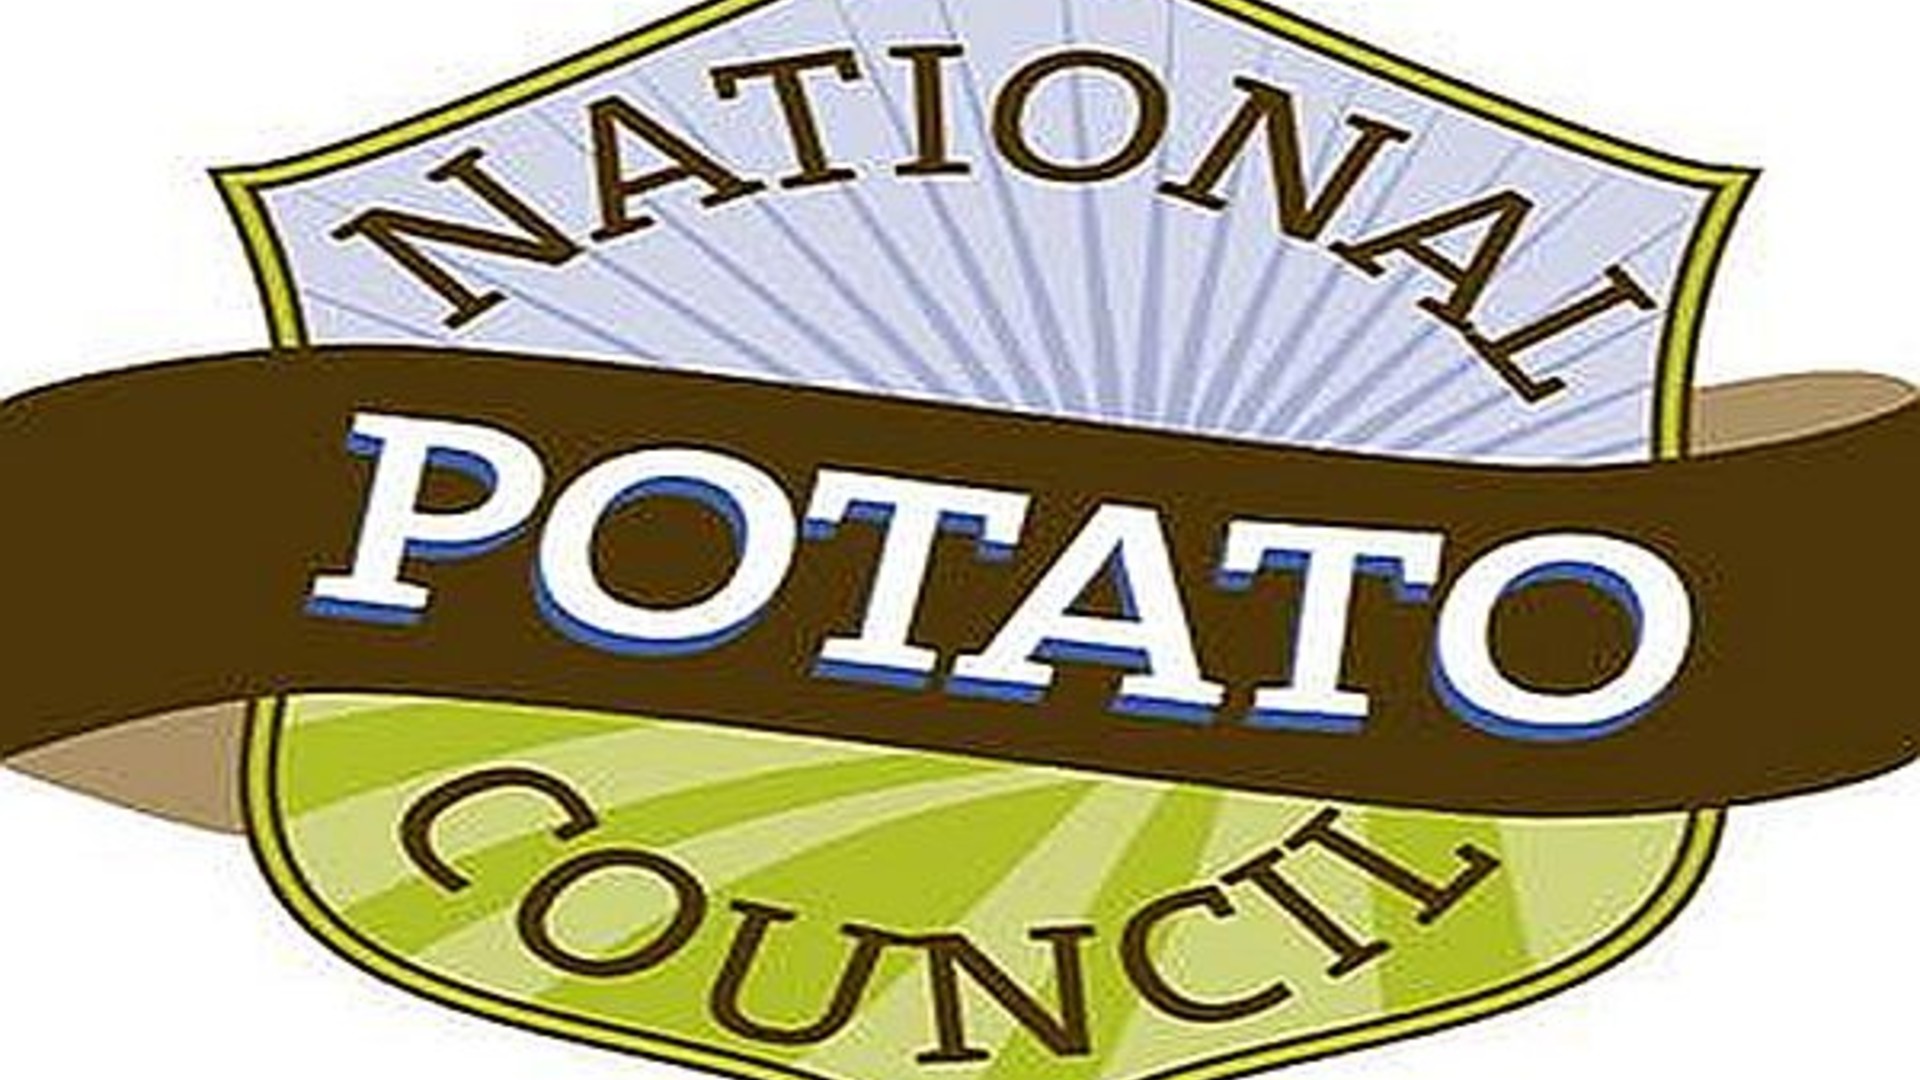 Potato Purchase Funding Pt 1